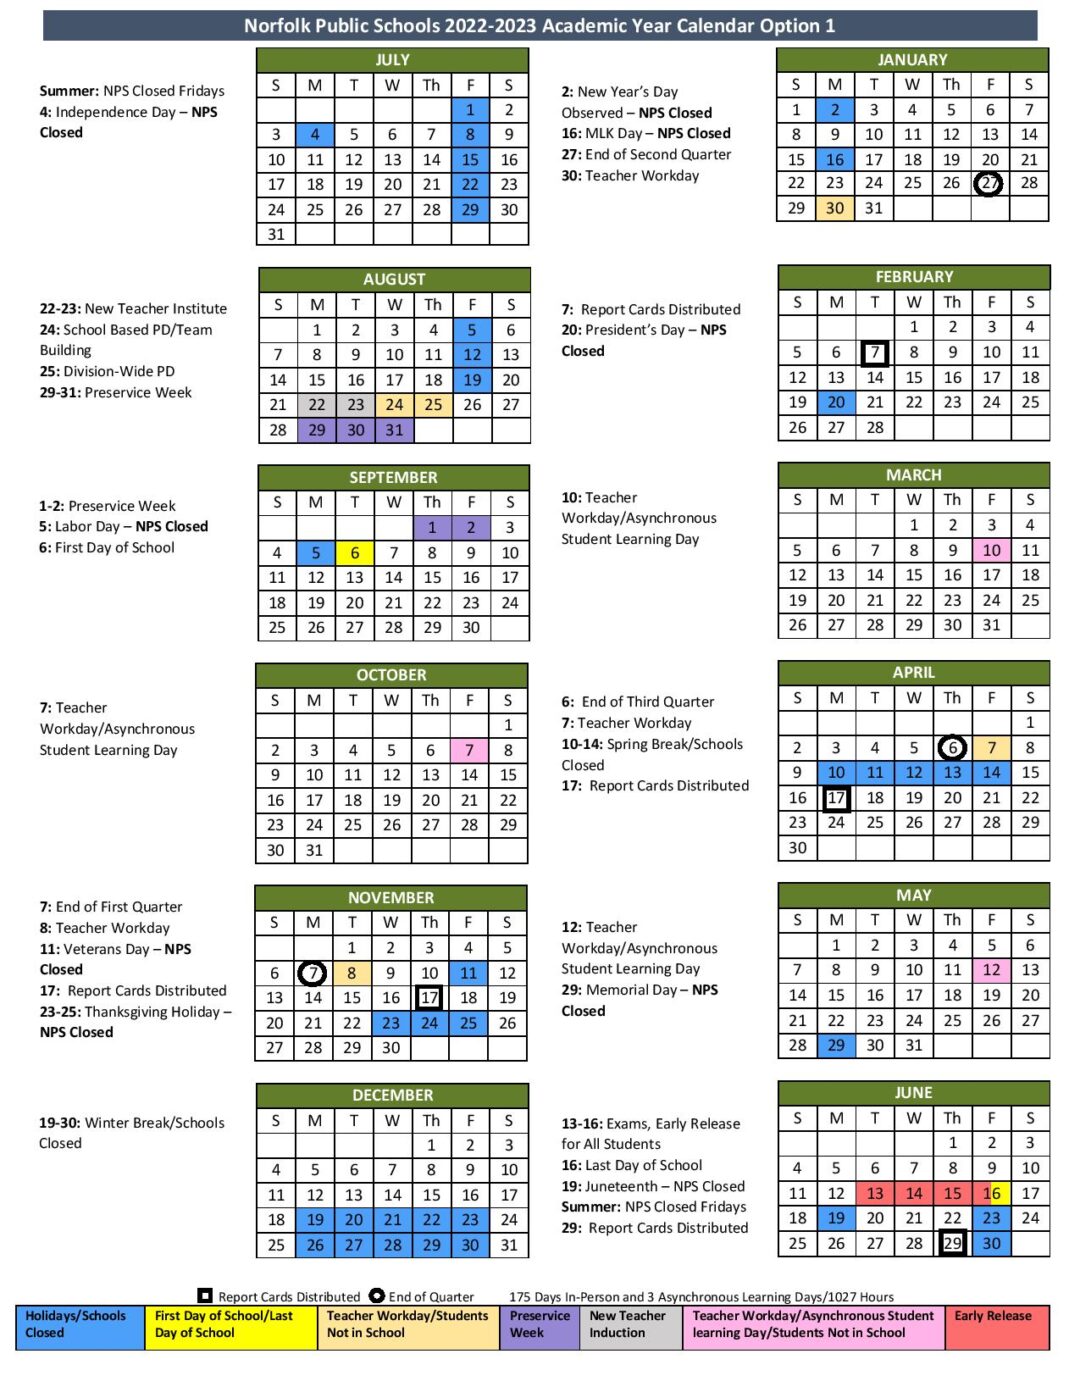 Norfolk Schools Calendar Anni Malena